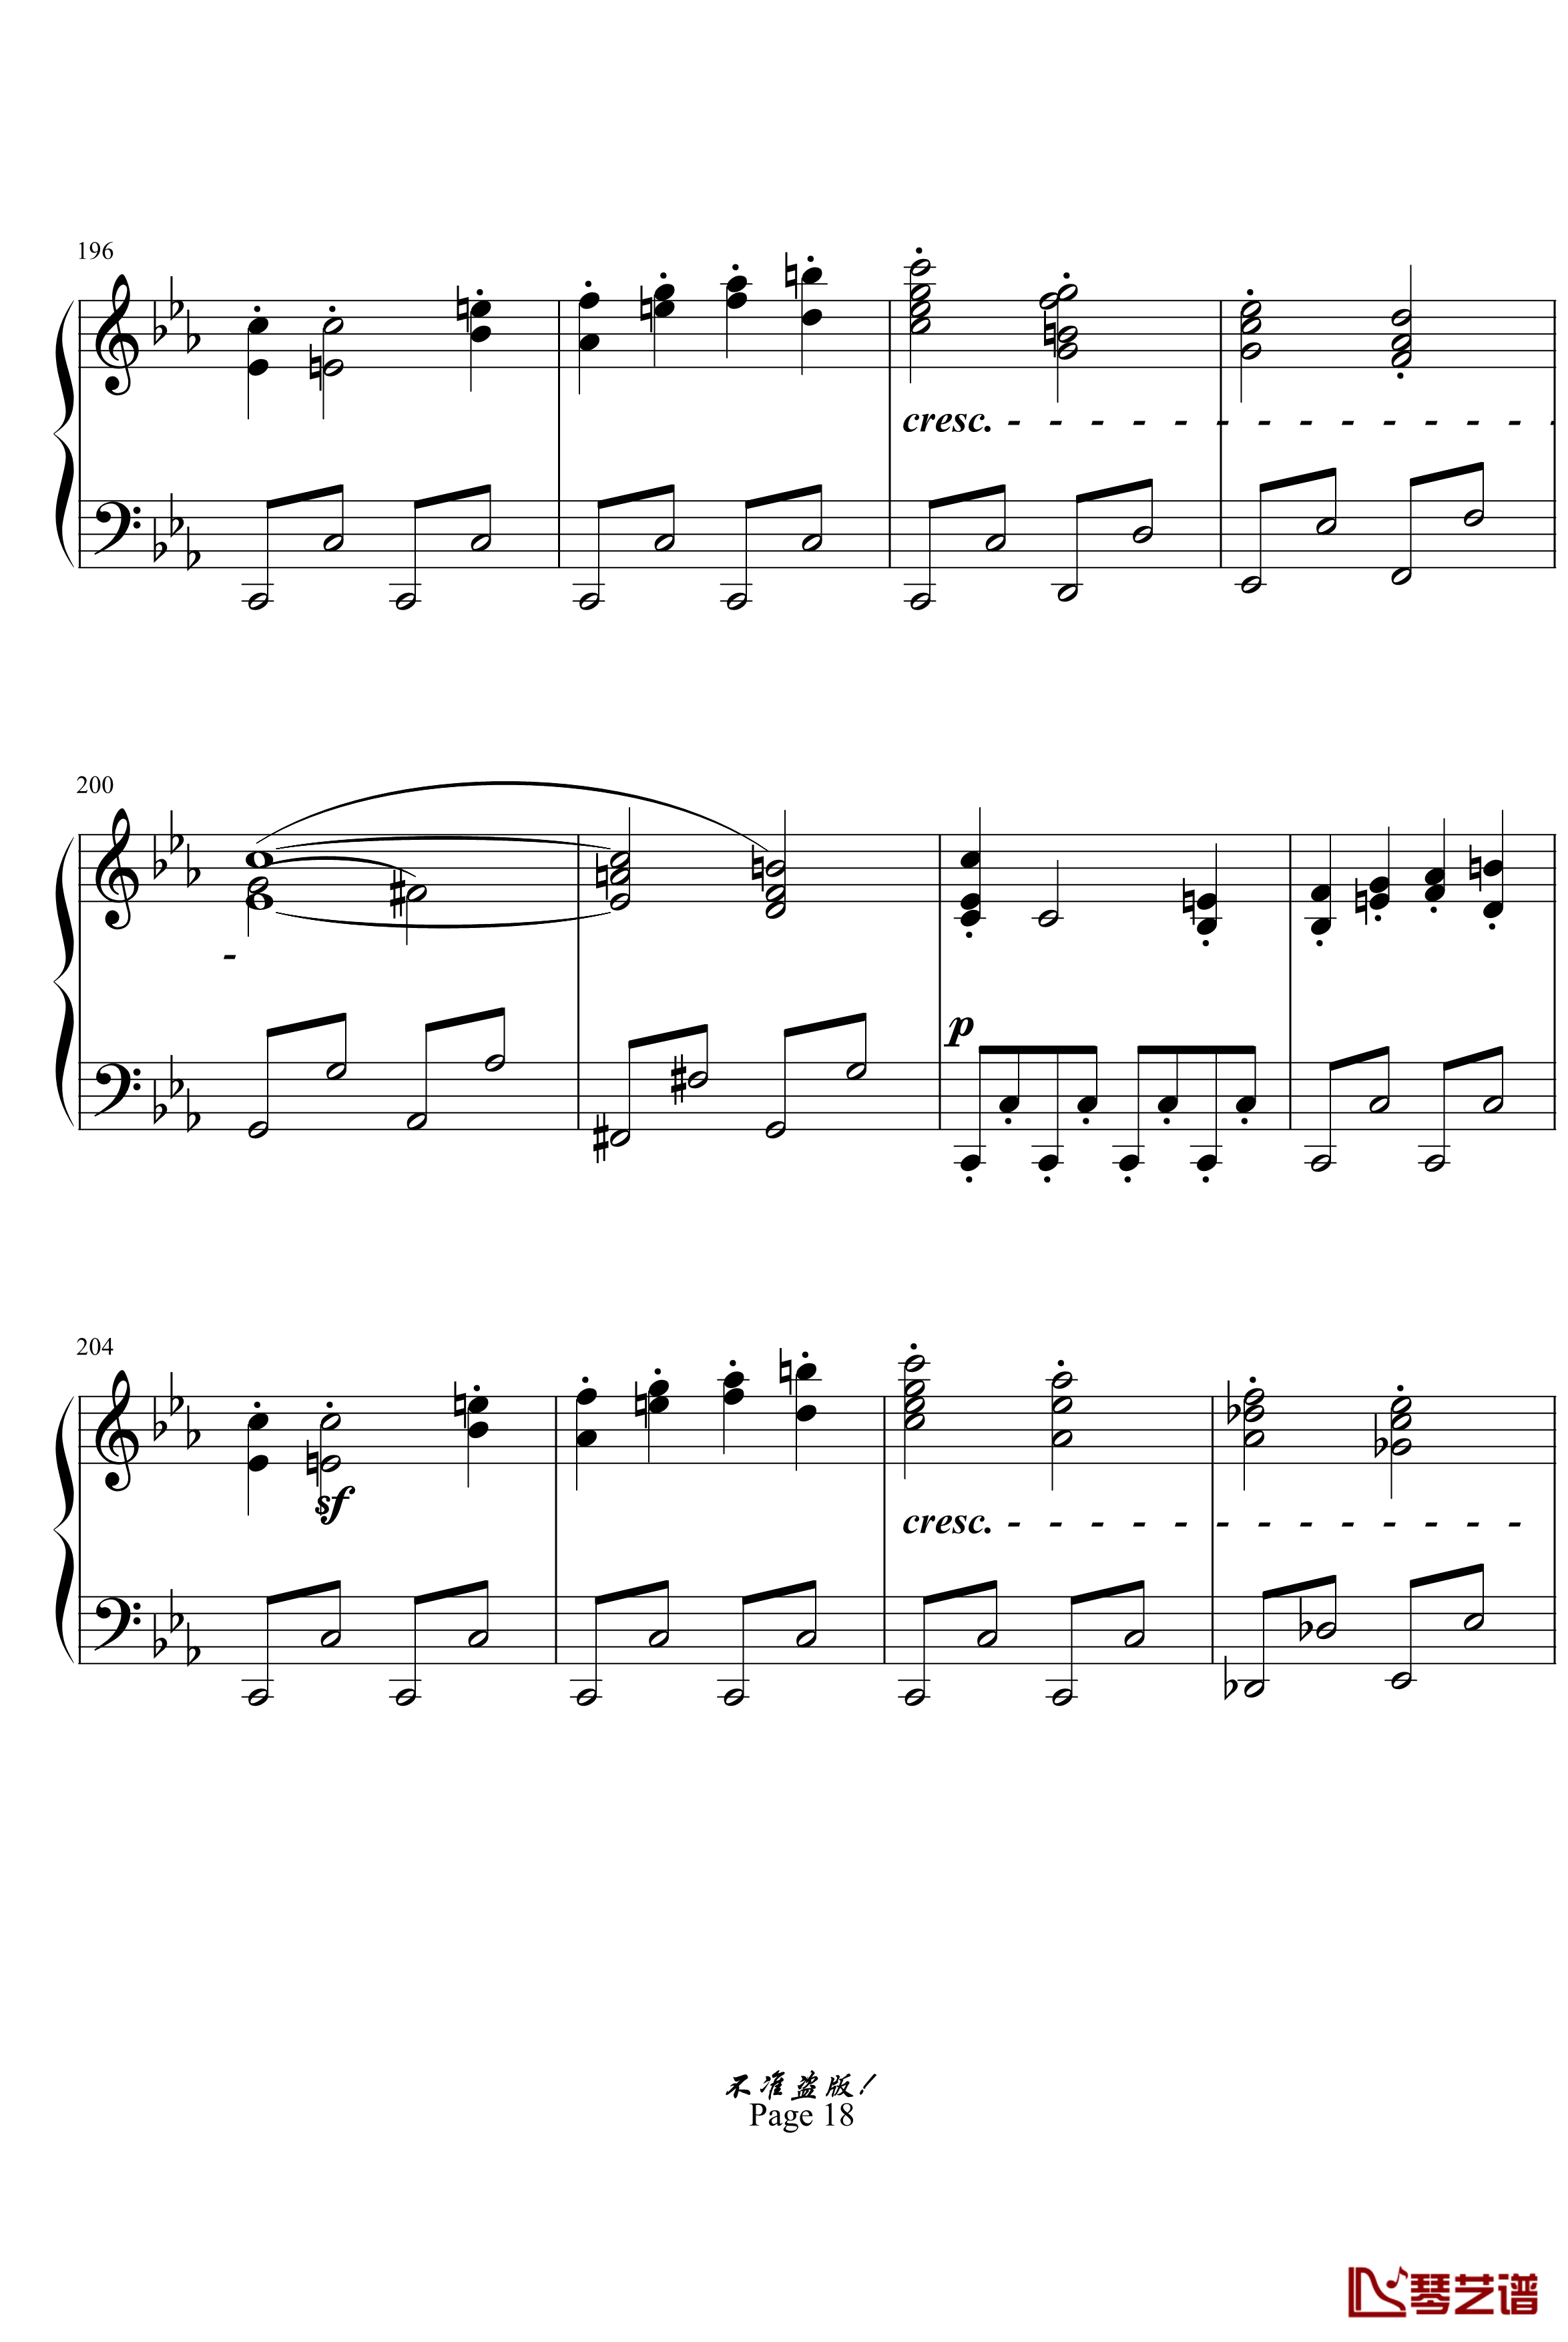 c小调第八钢琴奏鸣曲钢琴谱-悲怆第一乐章-beethoven-贝多芬